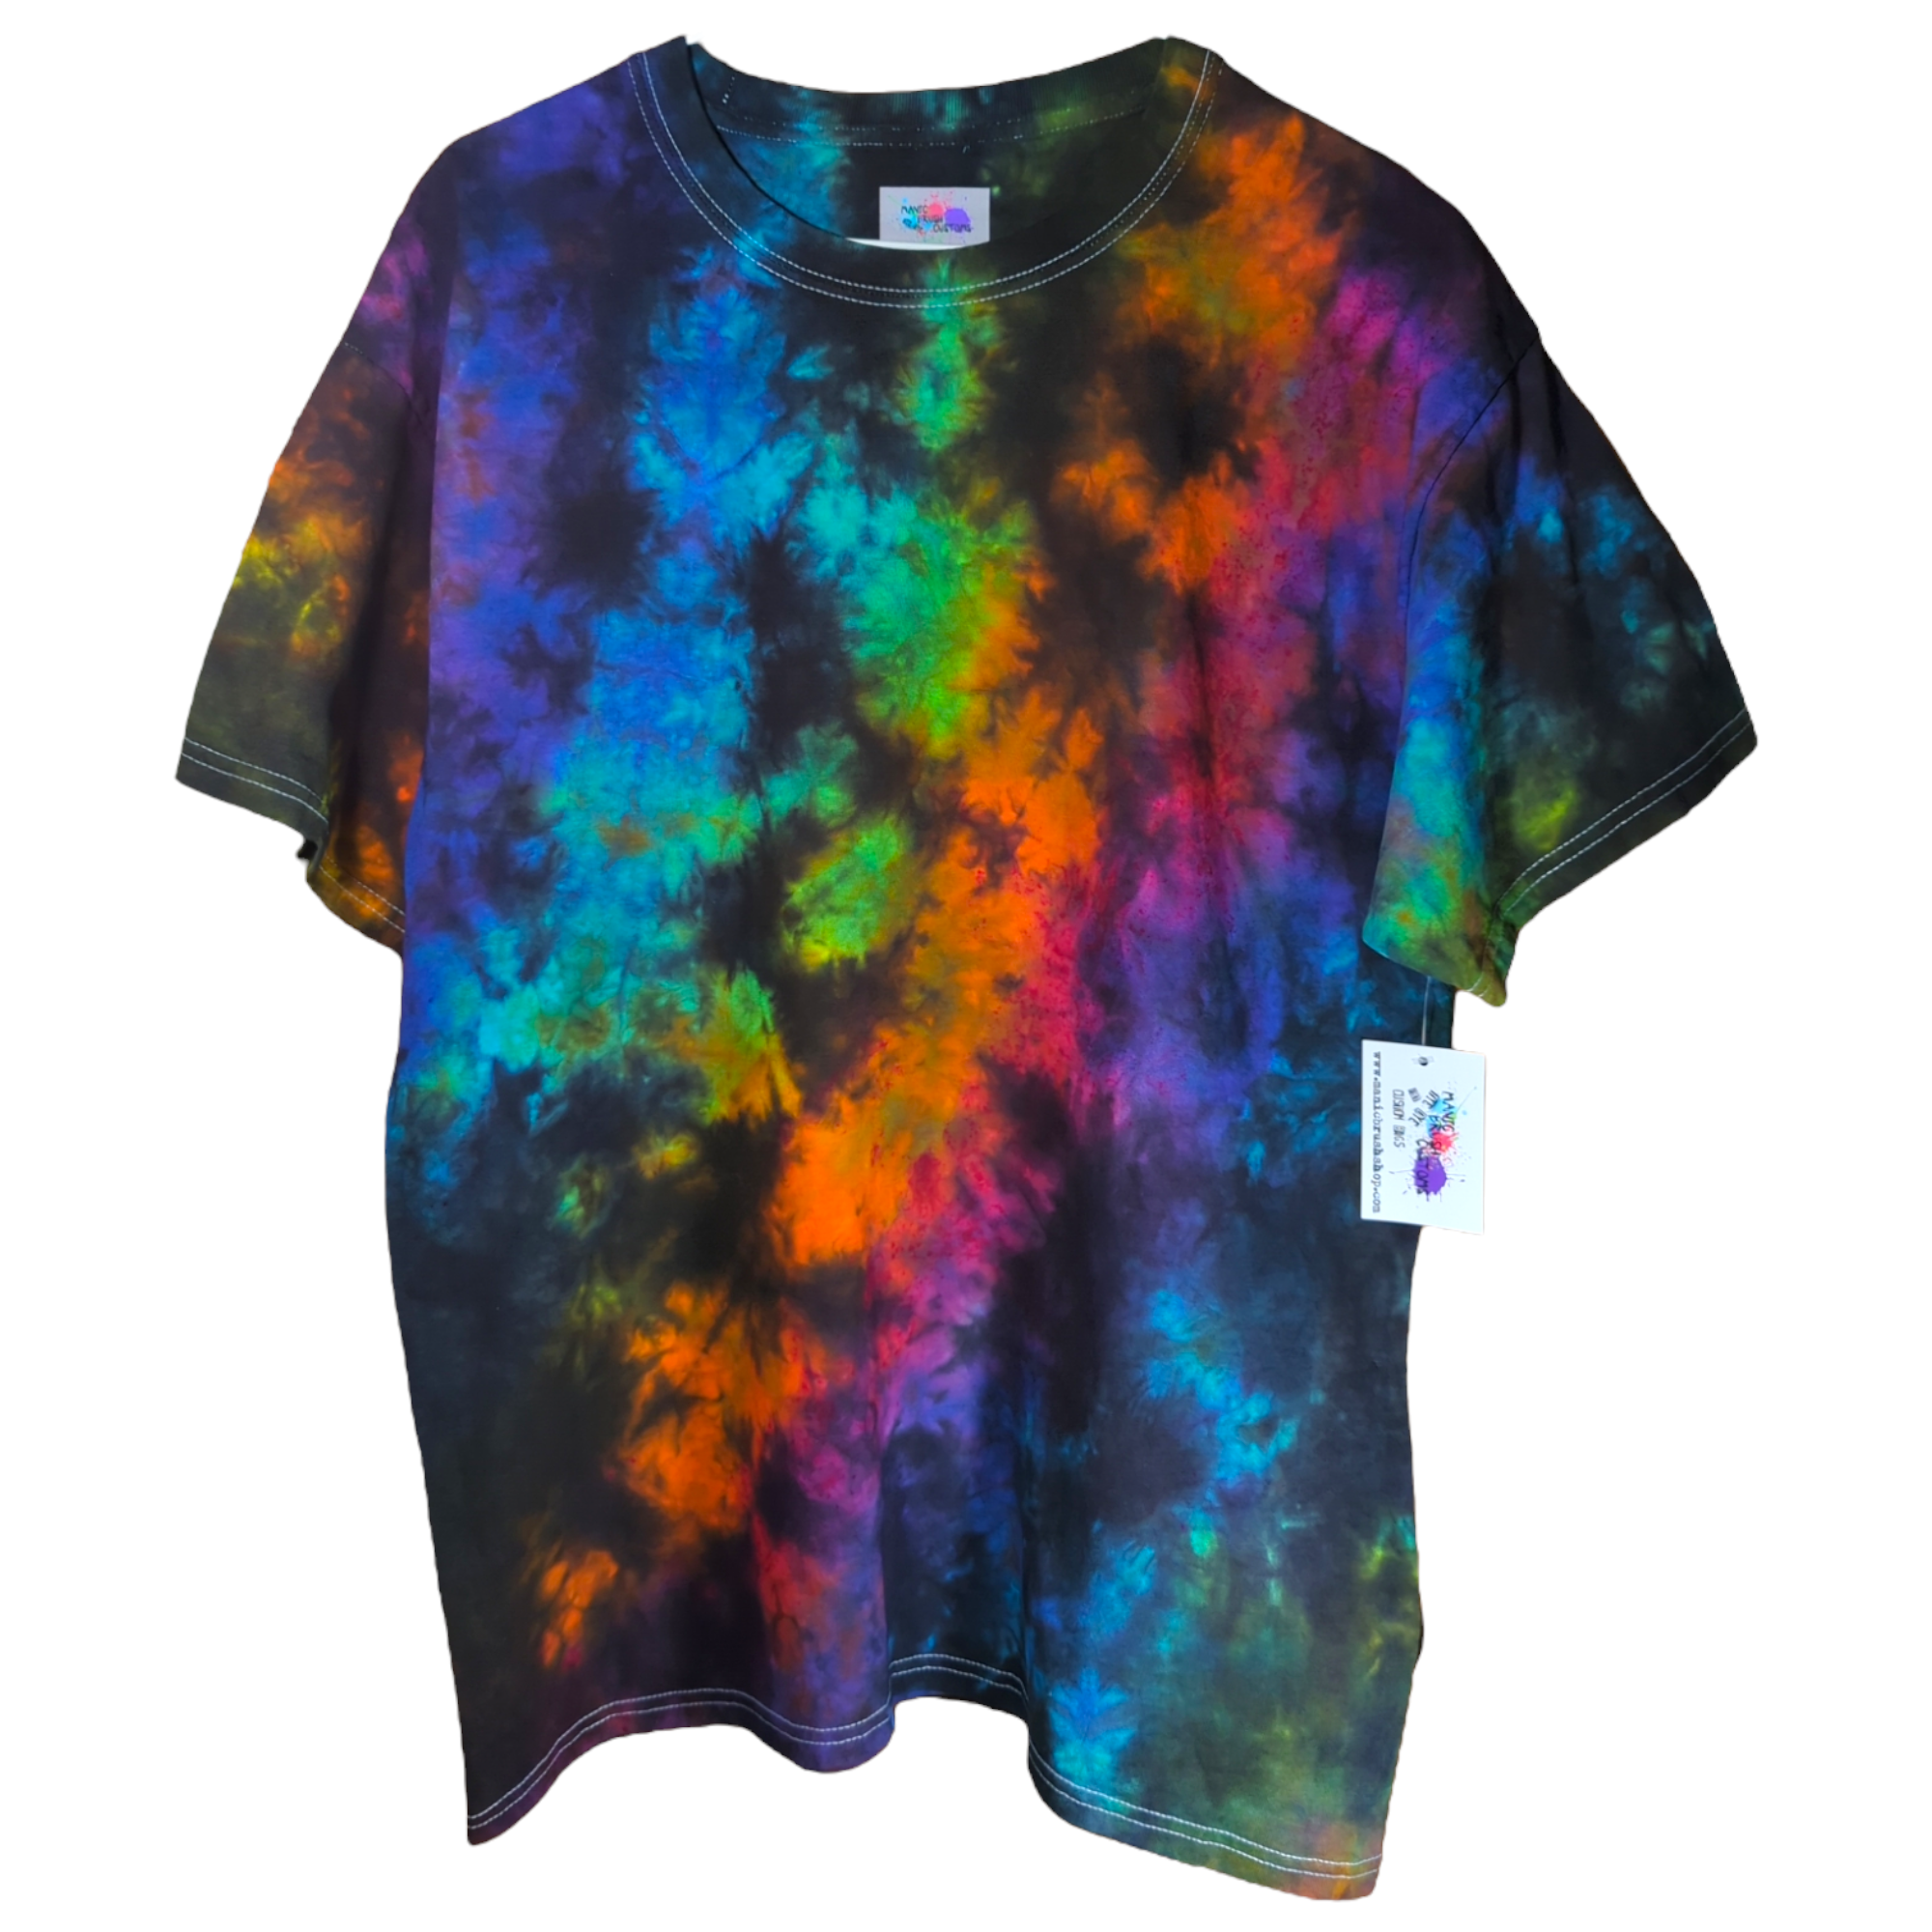 Rainbow Tie Dye T-Shirt Large